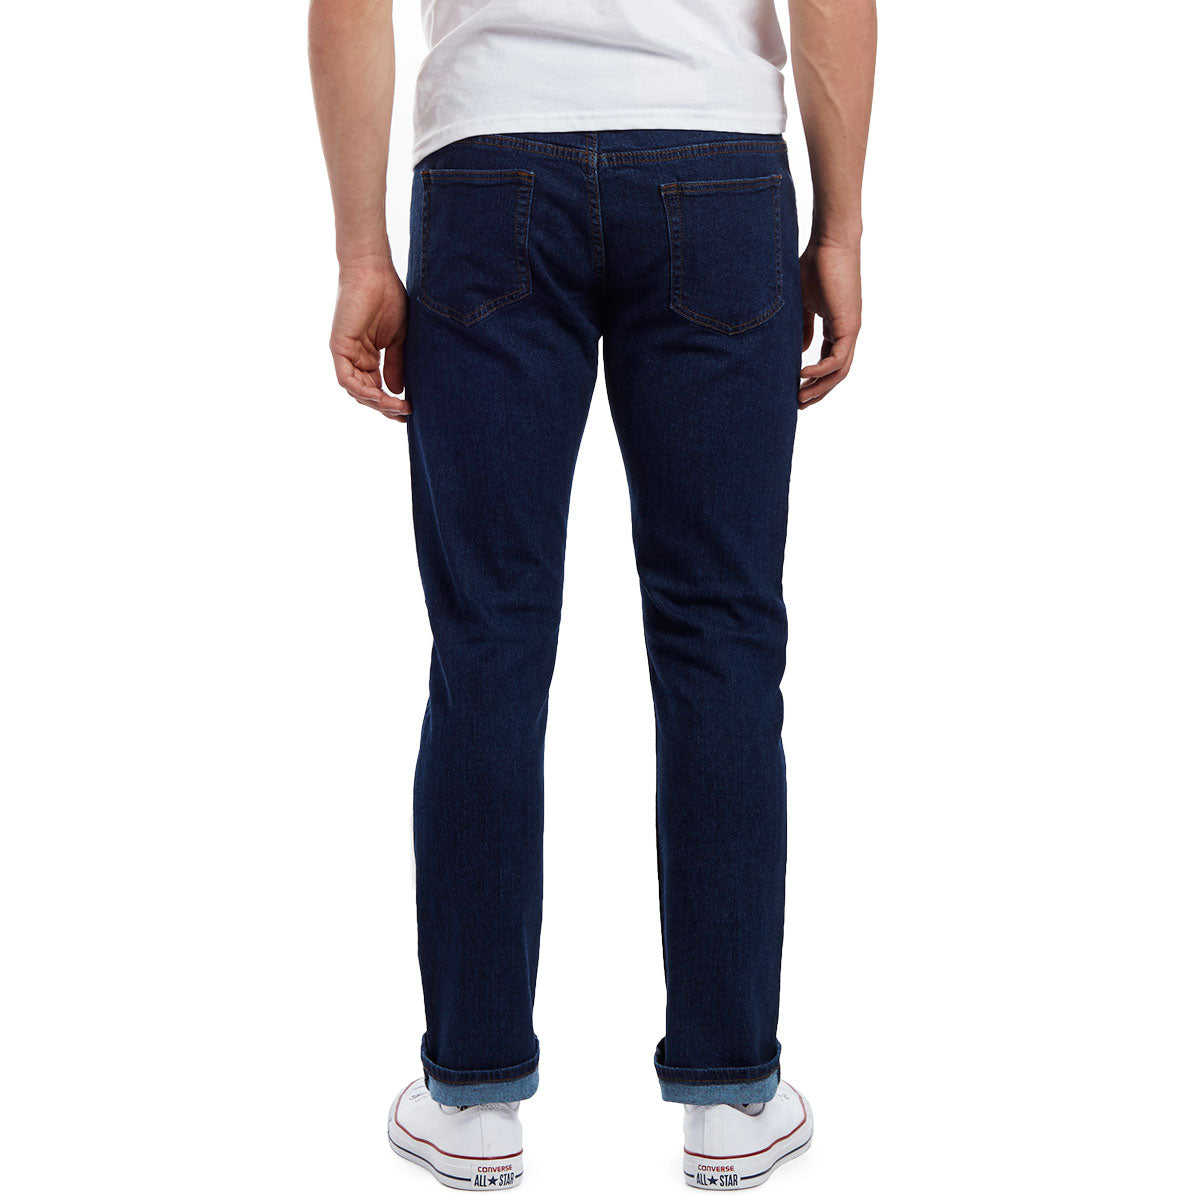 CCS Slim Fit Jeans - Dark Rinse image 4